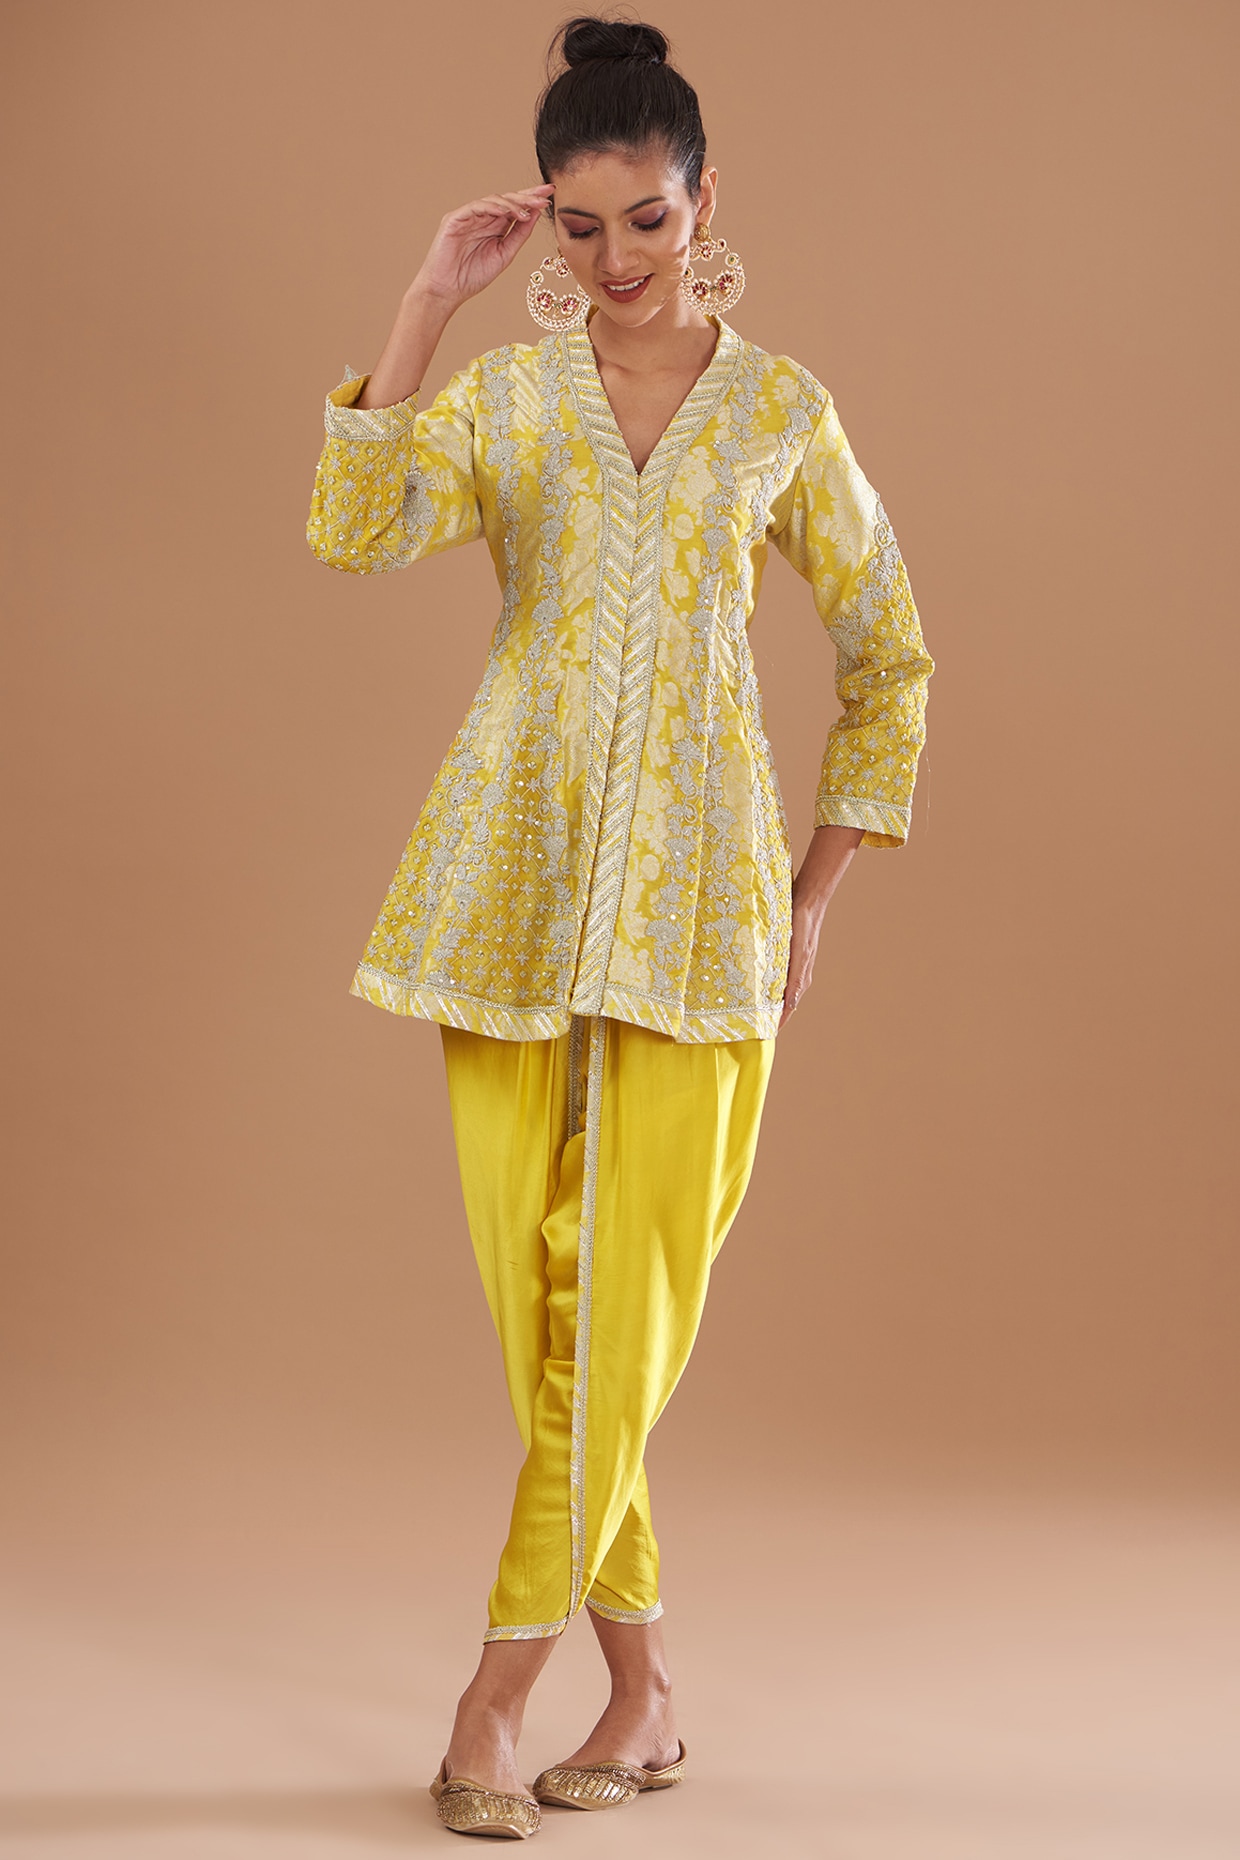 Buy Yellow Cotton Printed Dhoti Suit Online at Best Price | Cbazaar